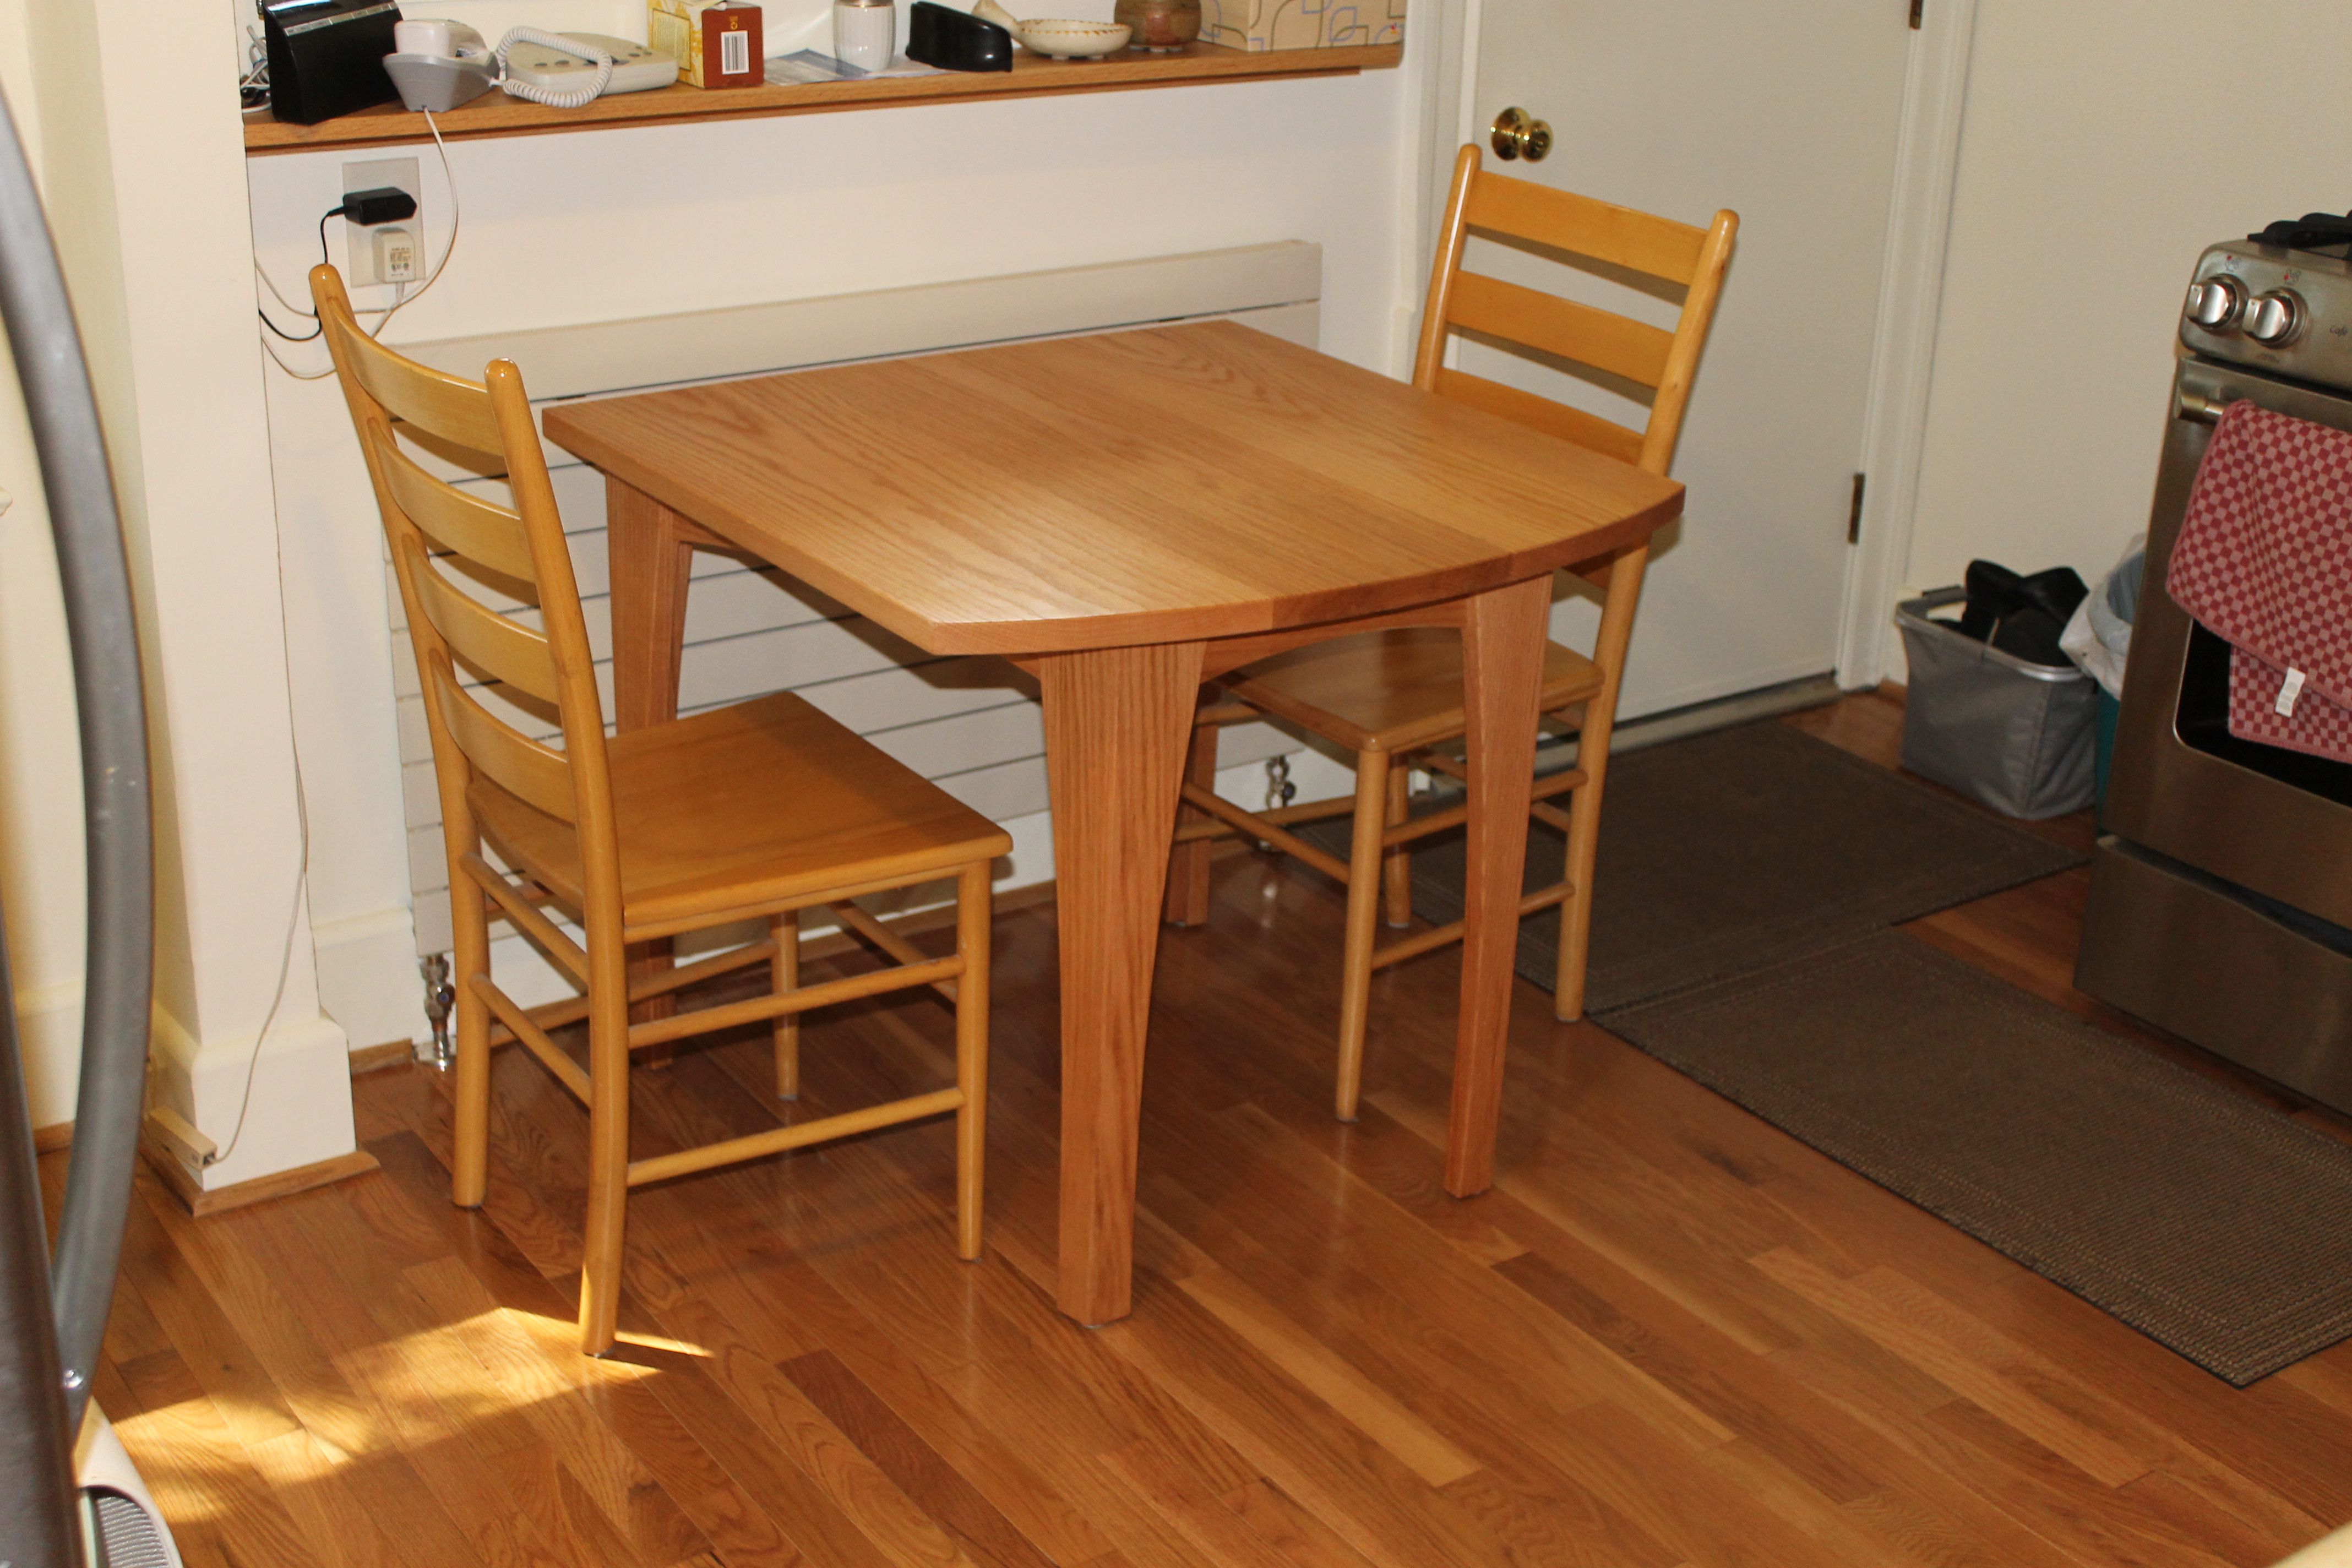 contemporary oak kitchen table